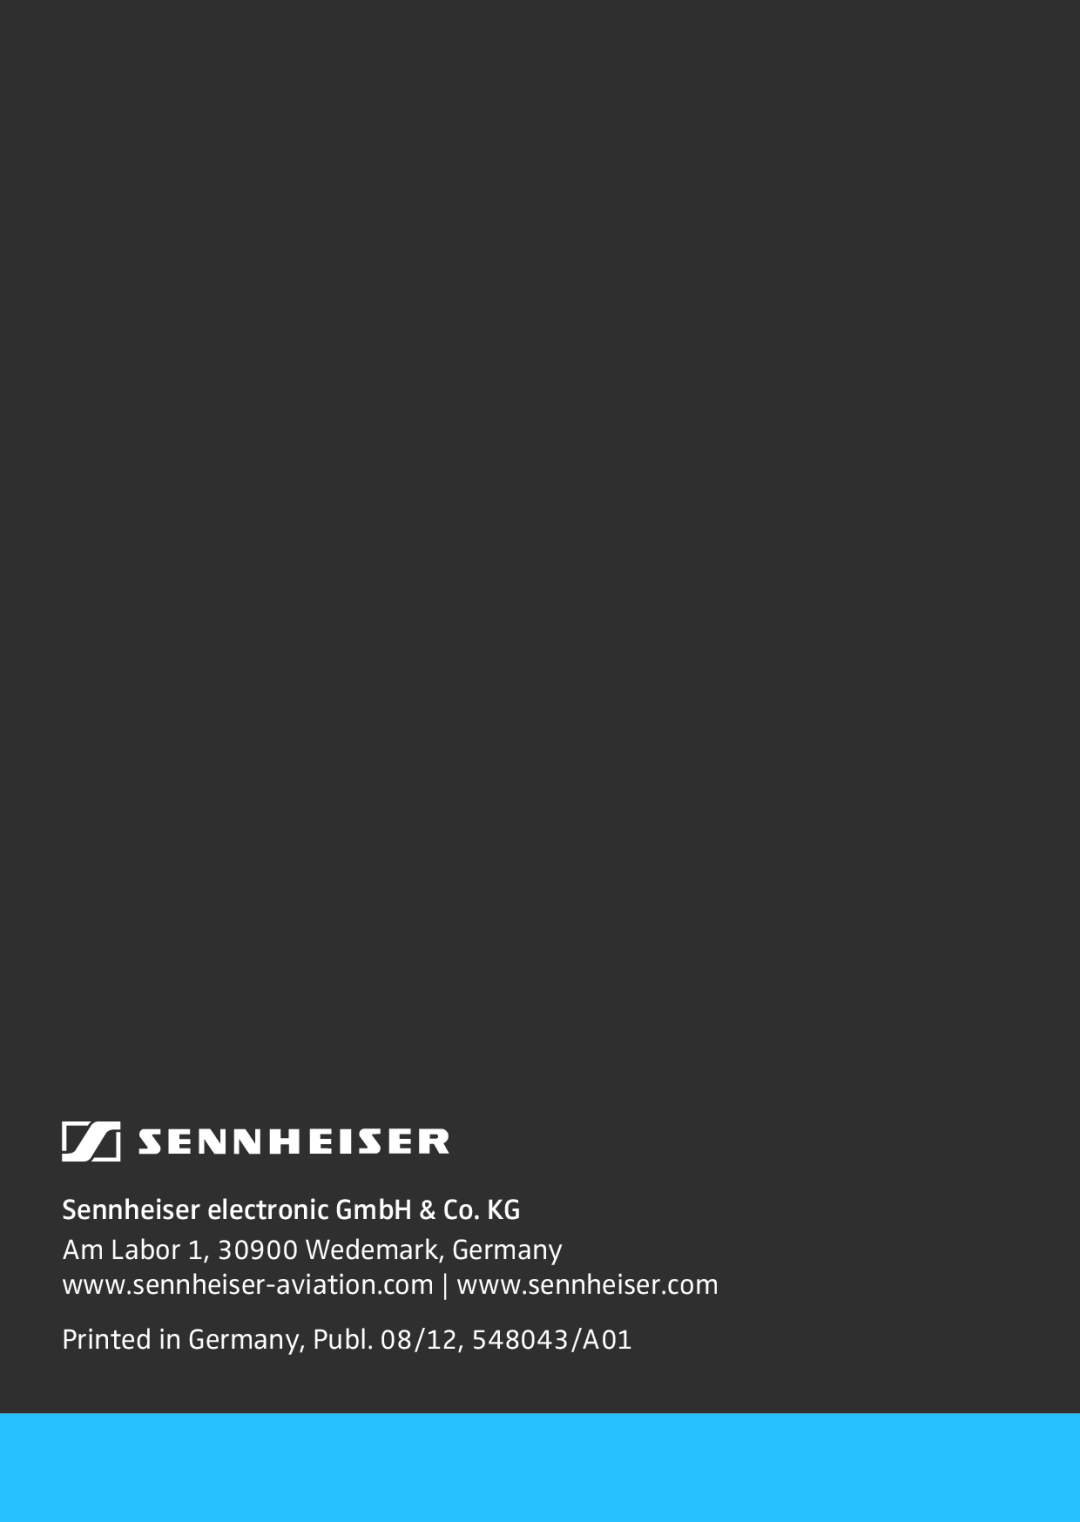 Sennheiser HMEC 26-2 instruction manual Sennheiser electronic GmbH & Co. KG 